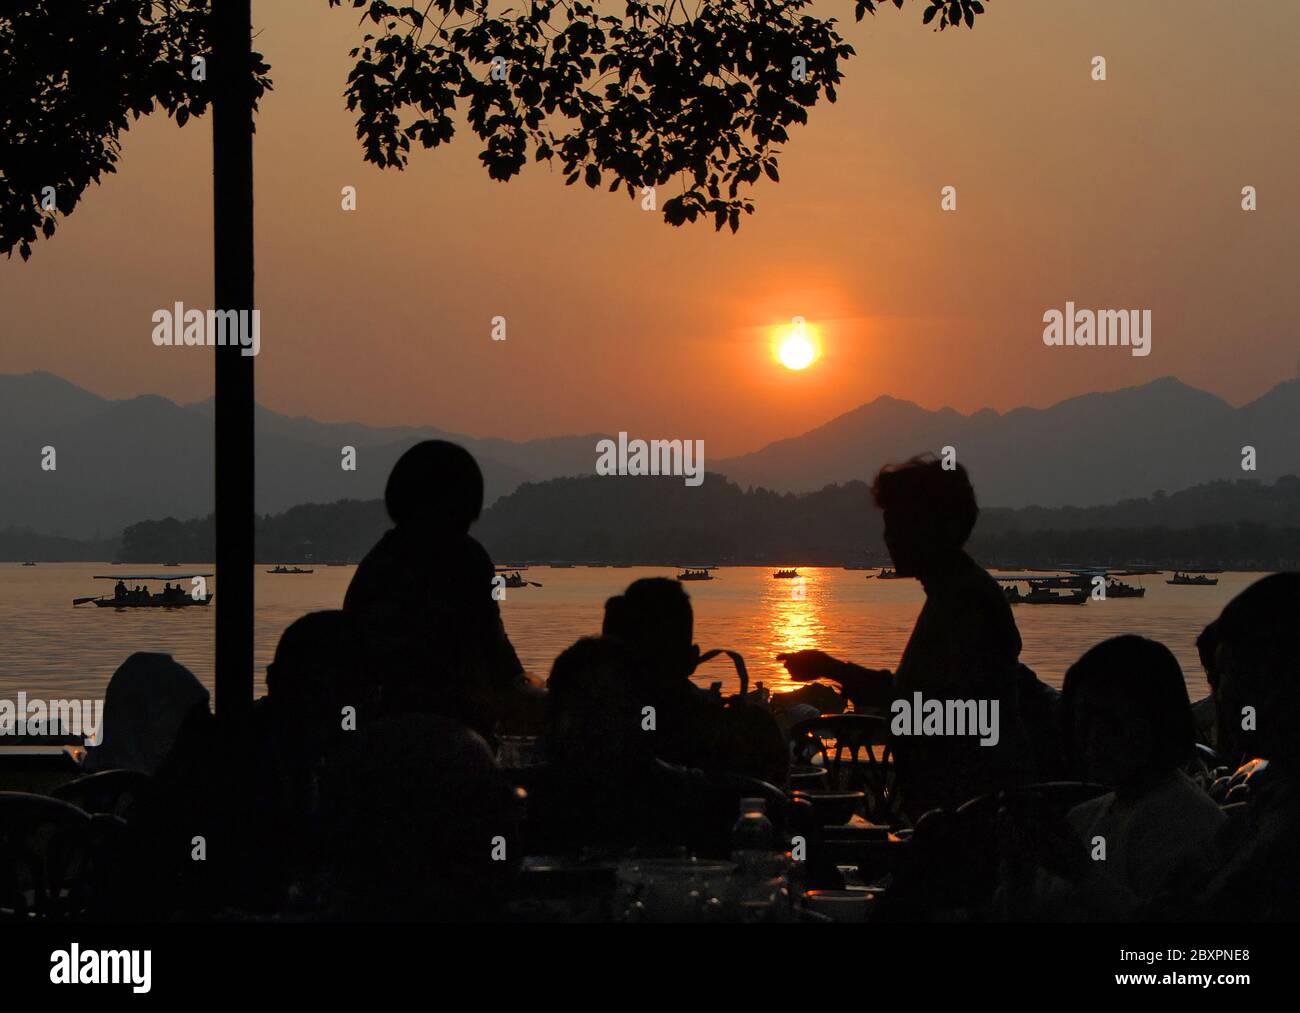 West Lake (Xi Hu) sunset in Hangzhou, Zhejiang Province, China. Sunset view of West Lake, Hangzhou with silhouettes of people sitting in a cafe. Stock Photo